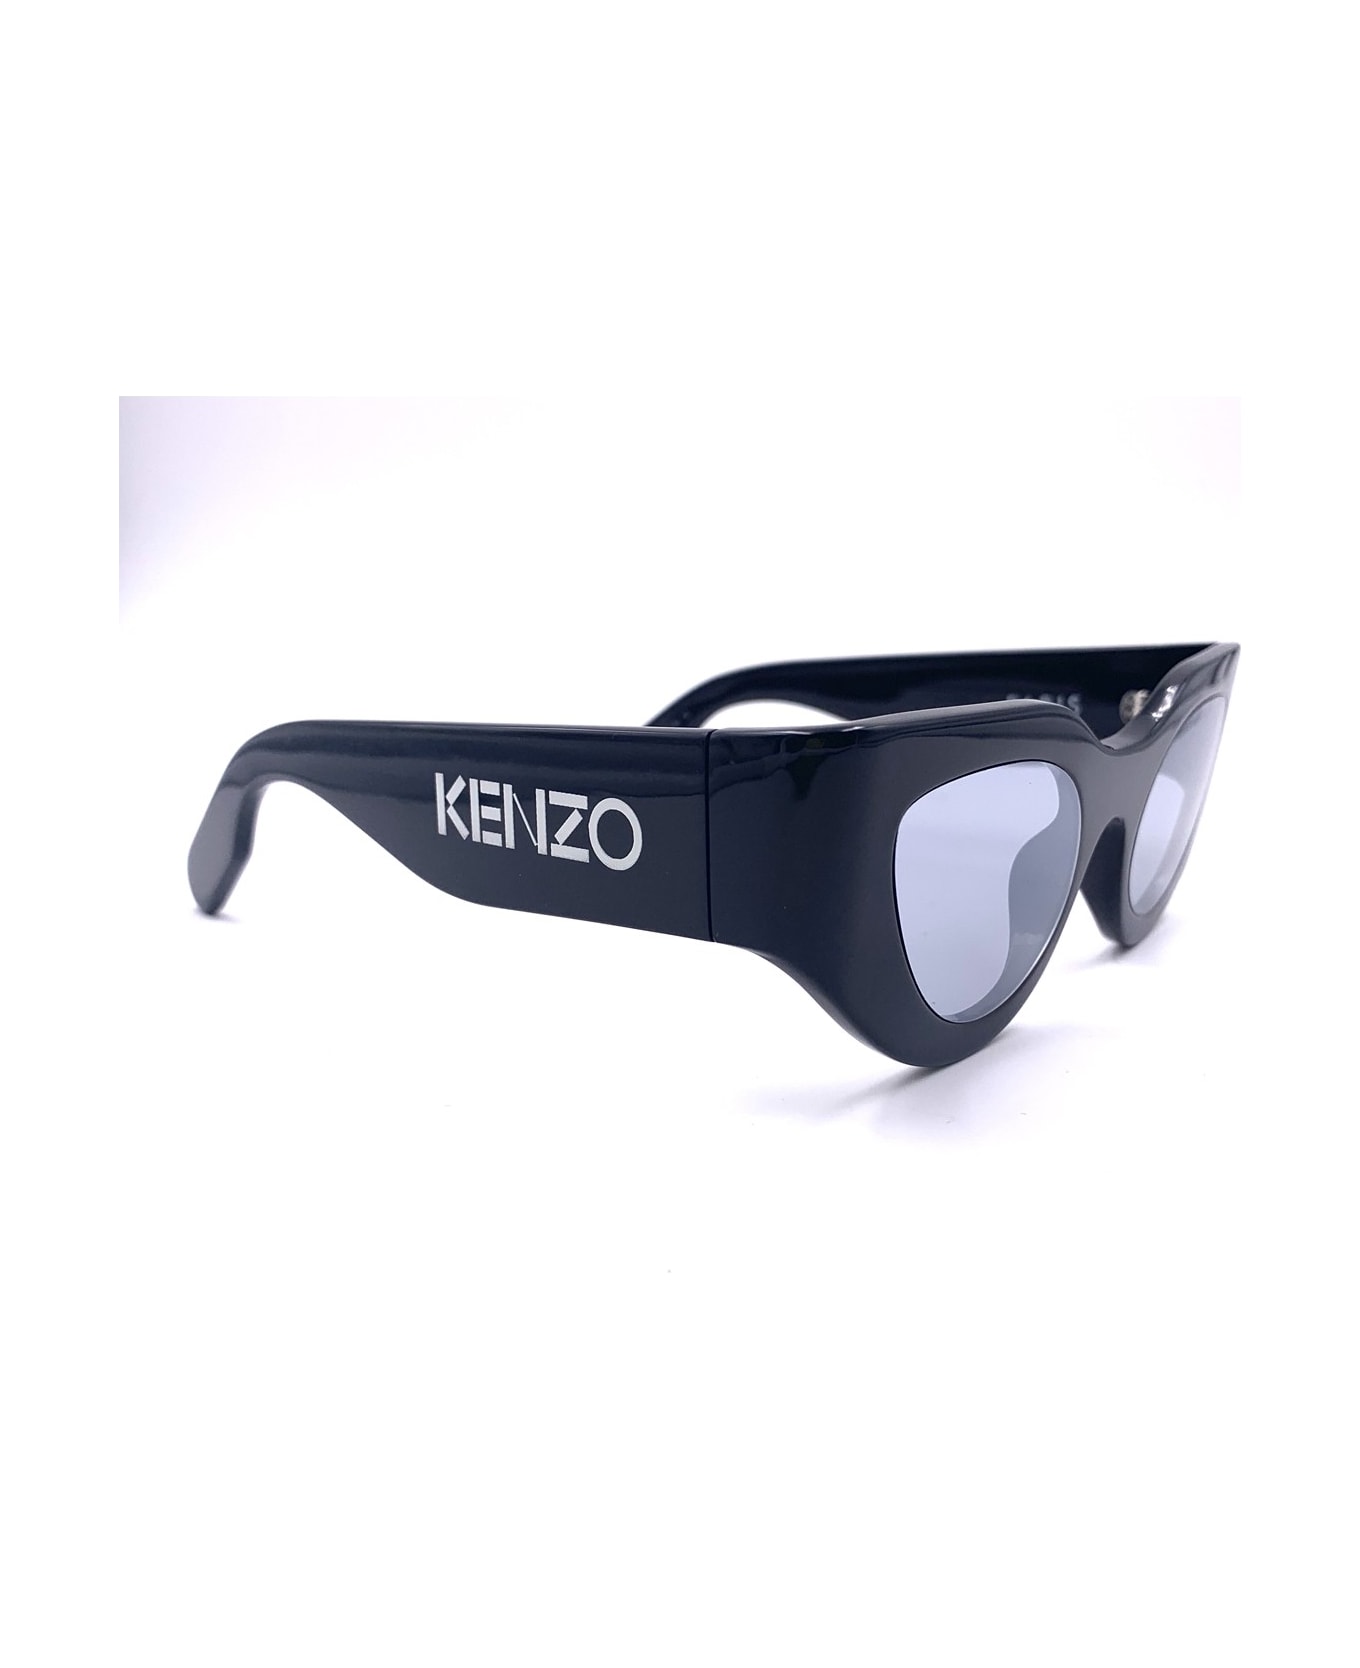 Kenzo Kz40067i Sunglasses - Nero サングラス